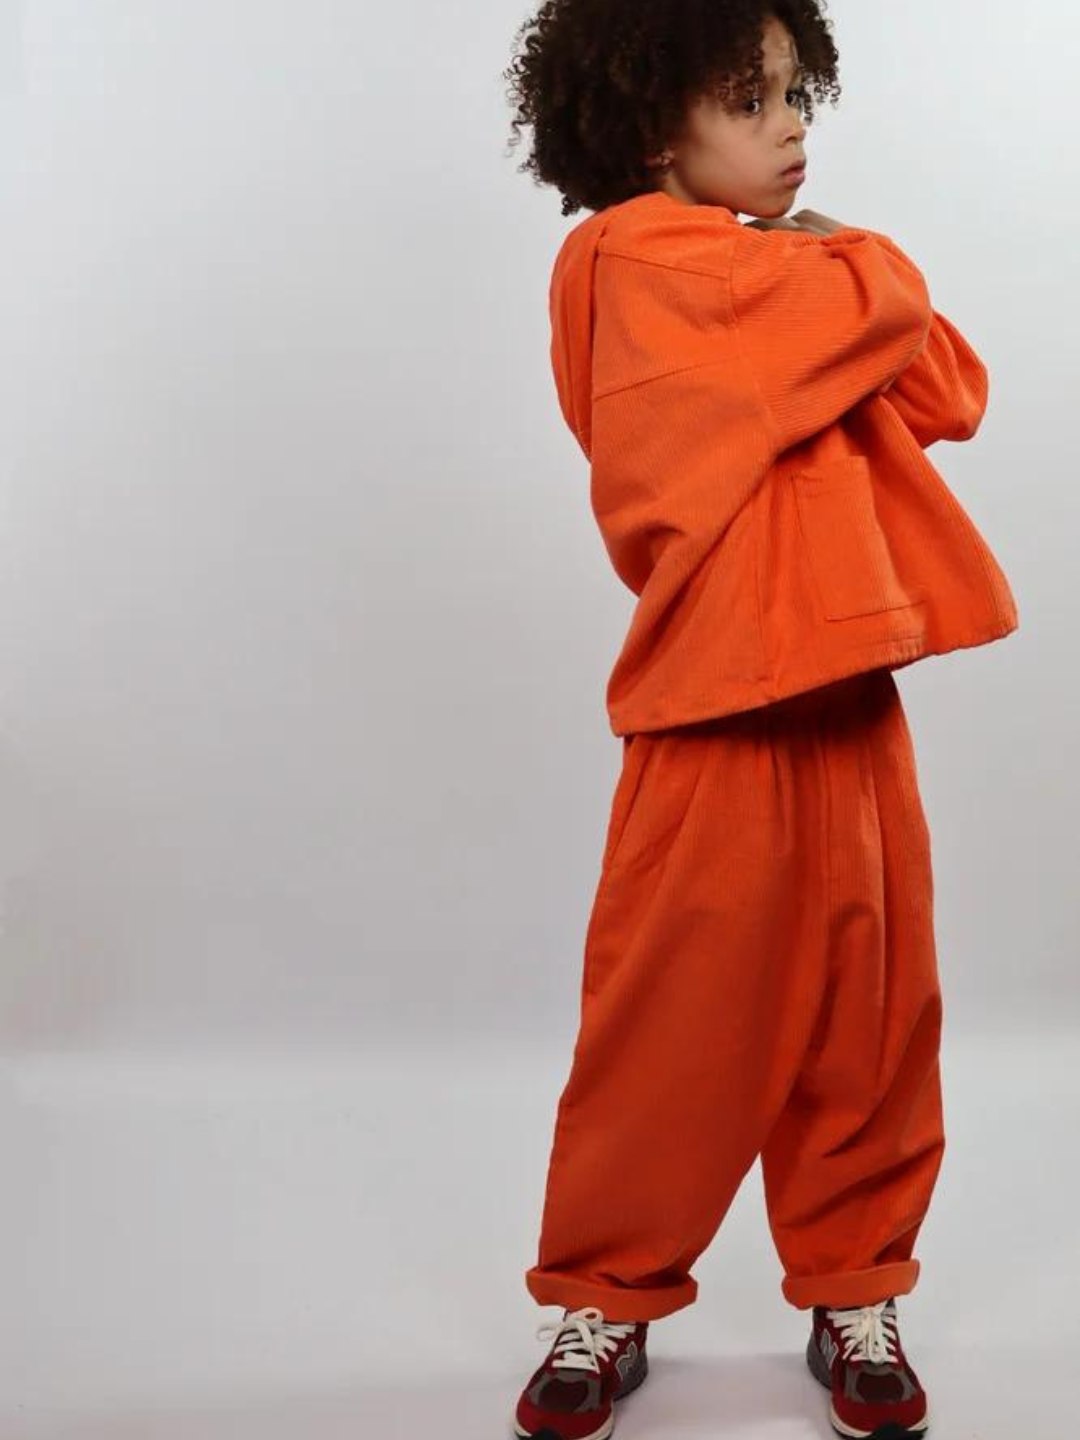 Child wearing orange kids' hooded smock and pants